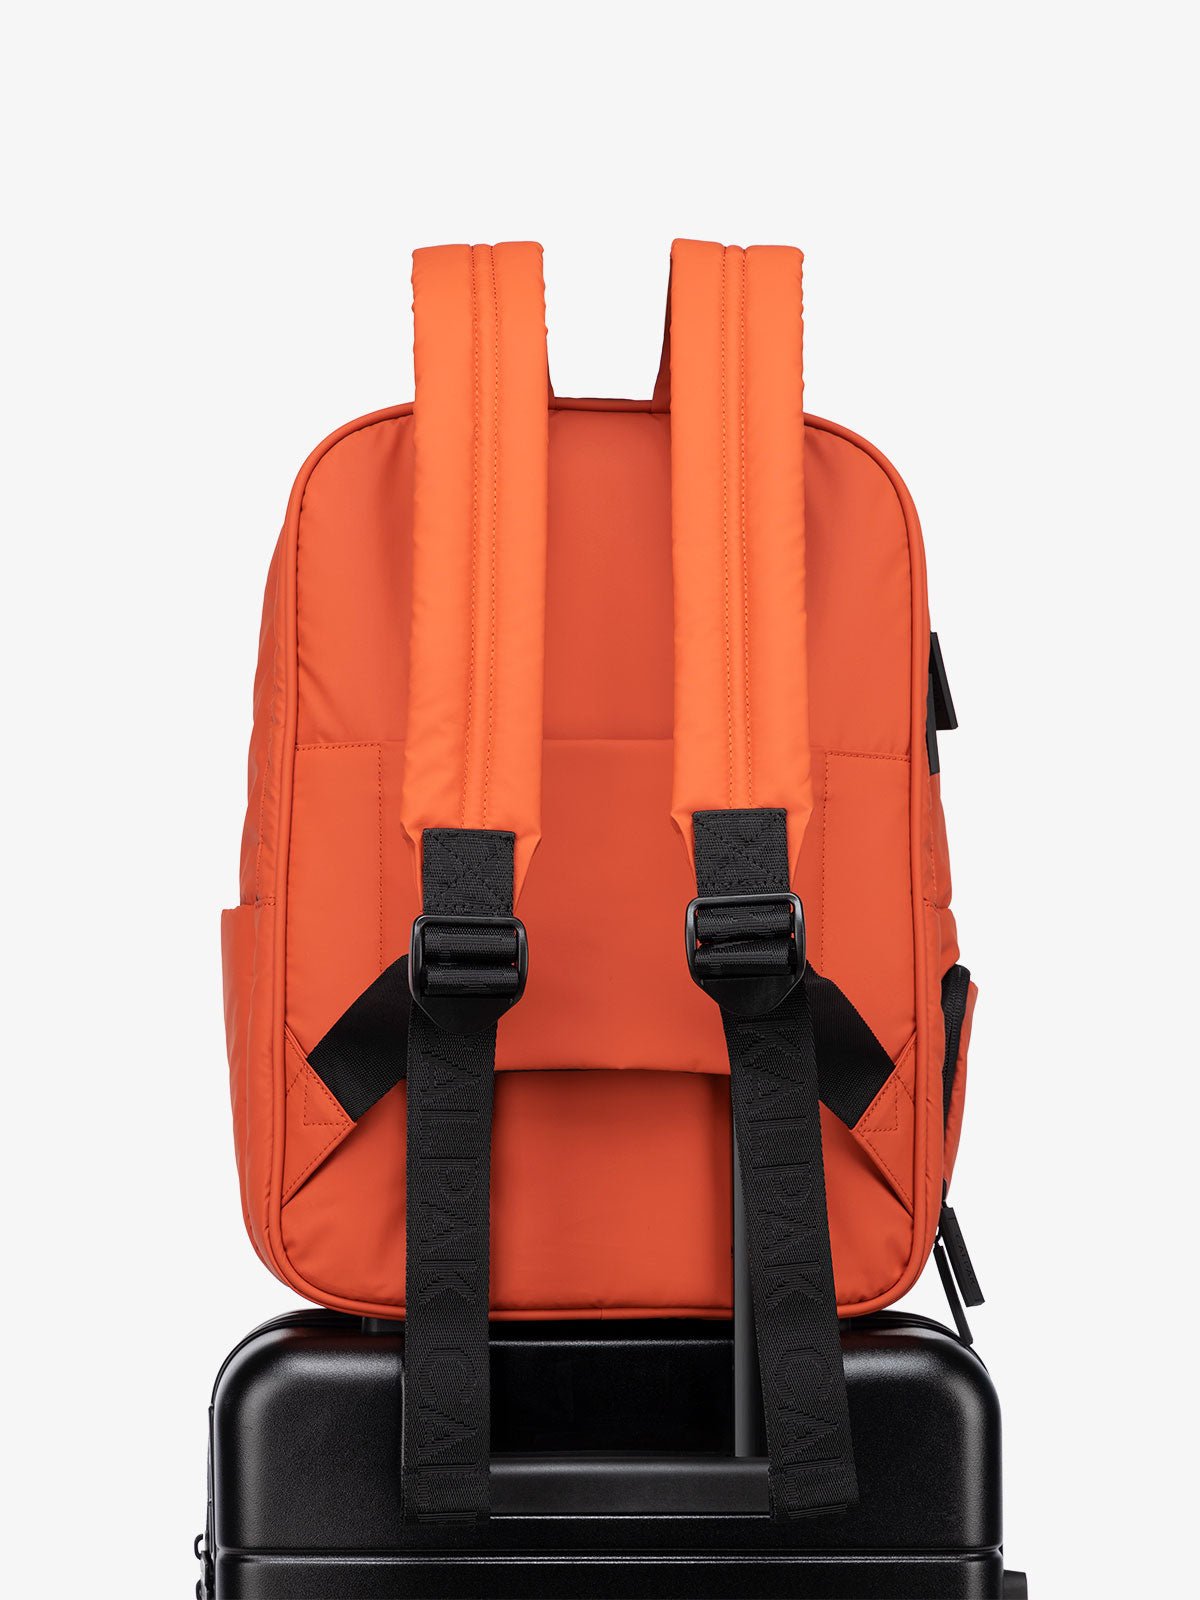 luggage backpack with trolley sleeve in red orange brick